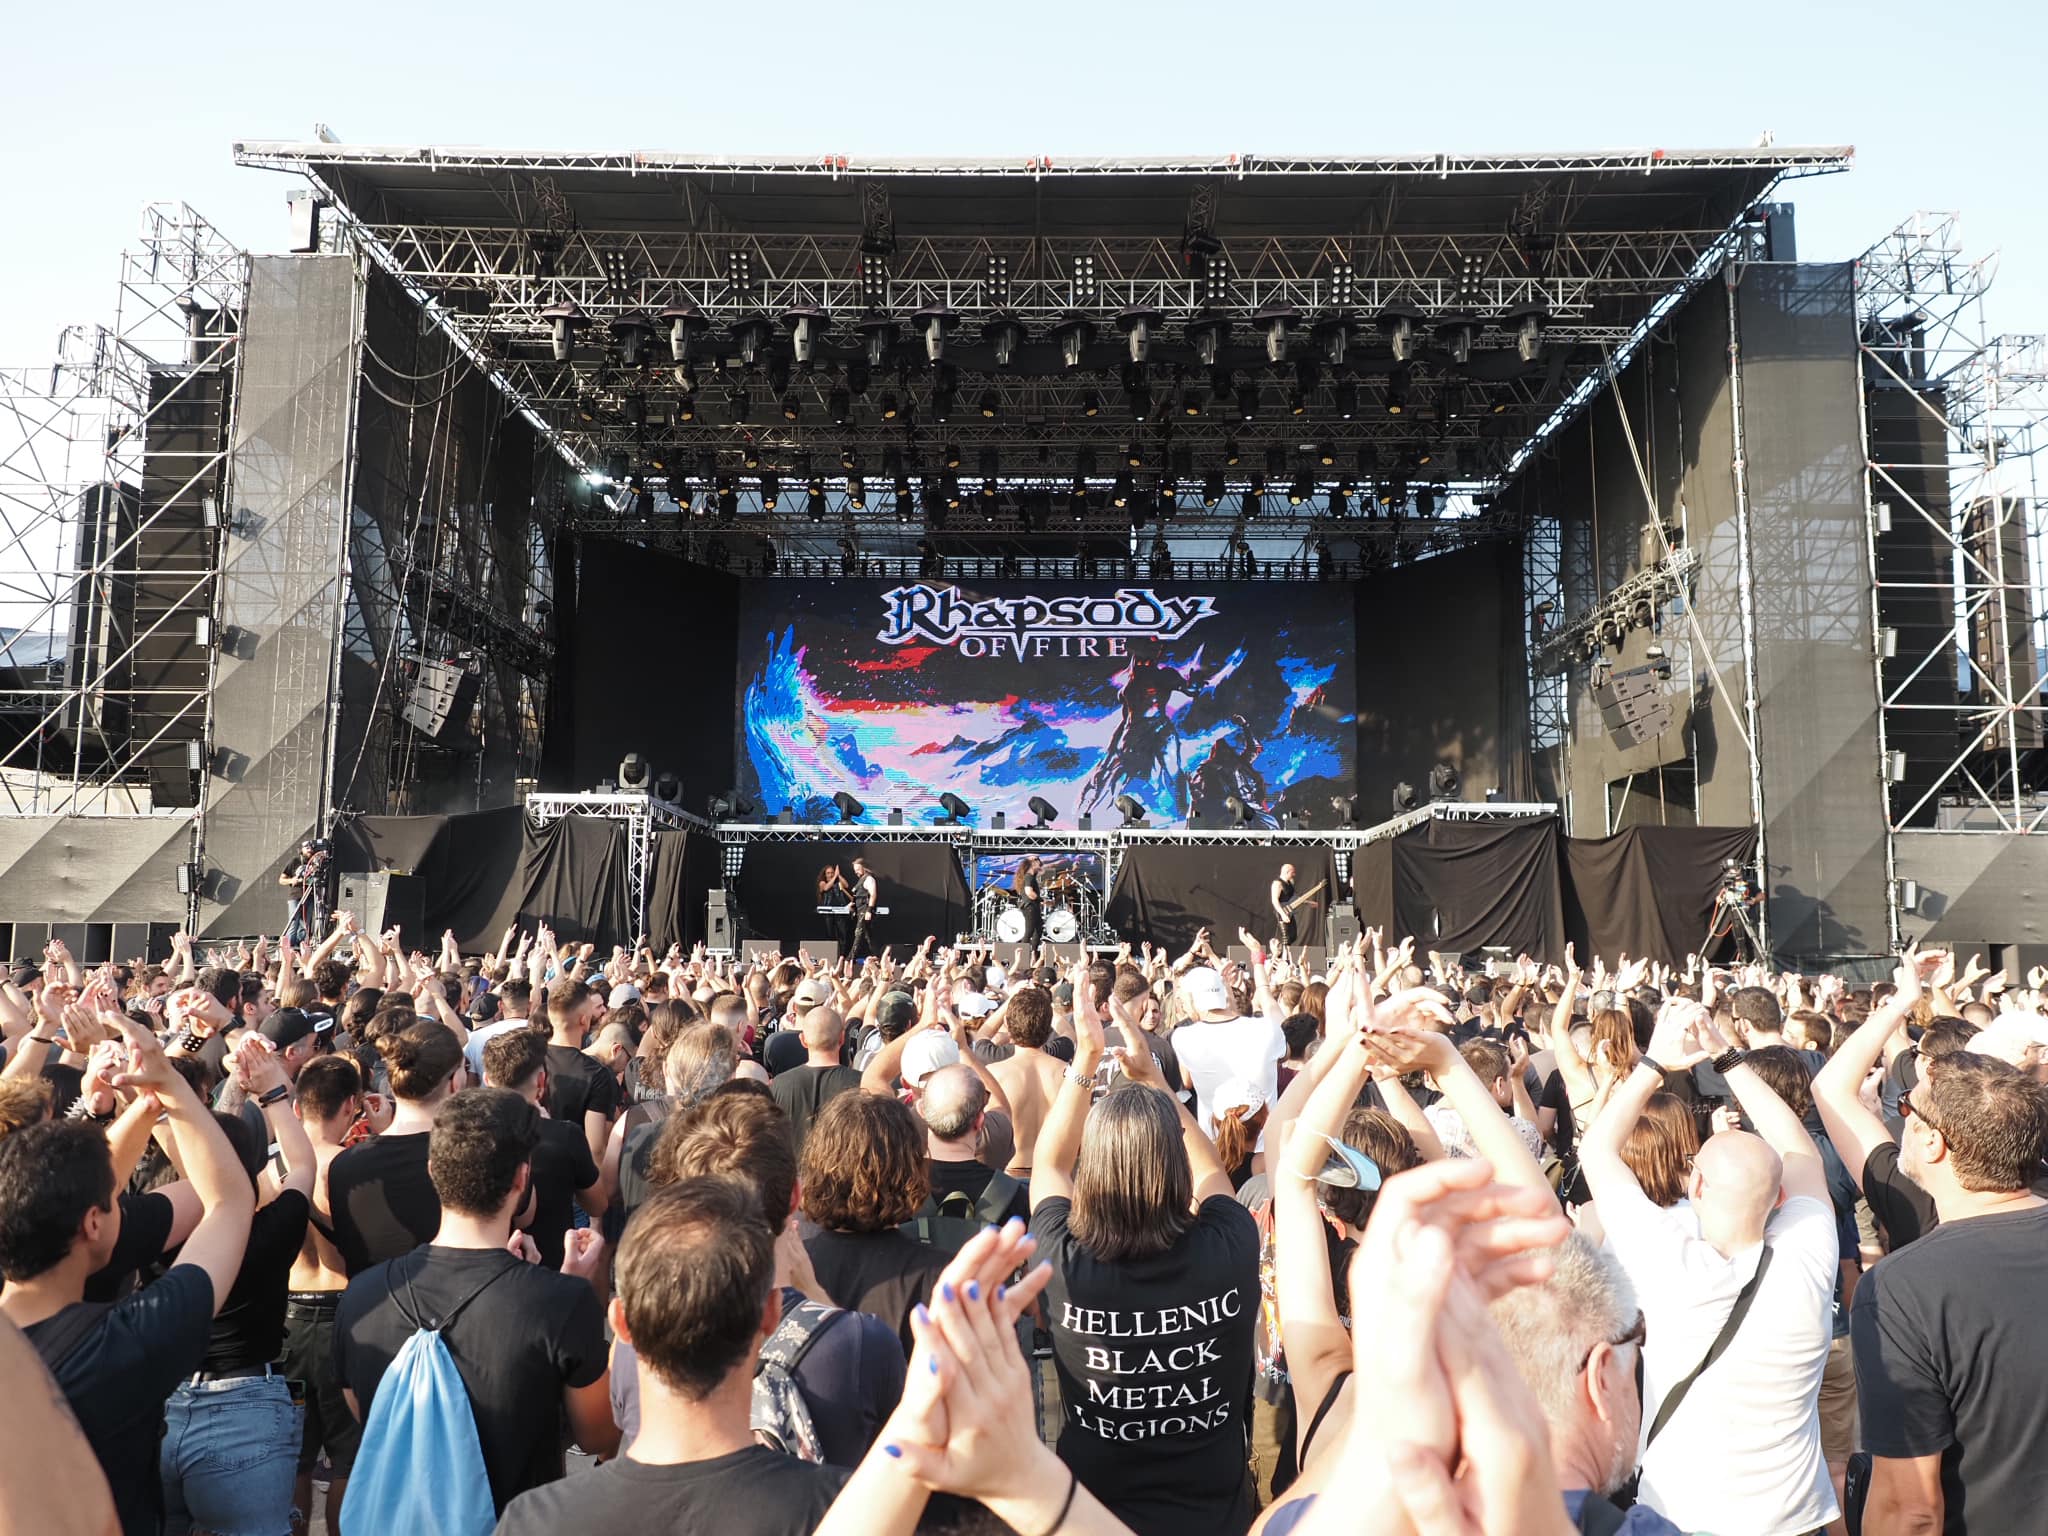 Rhapsody of Fire - Release Athens Festival 2022